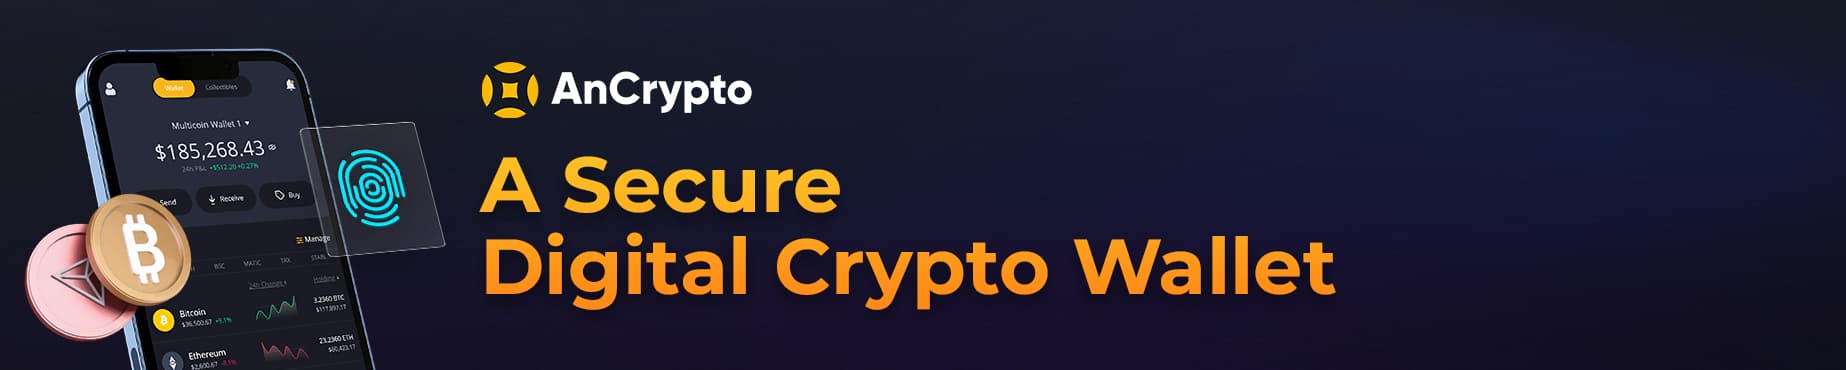 AnCrypto - a secure digital crypto wallet